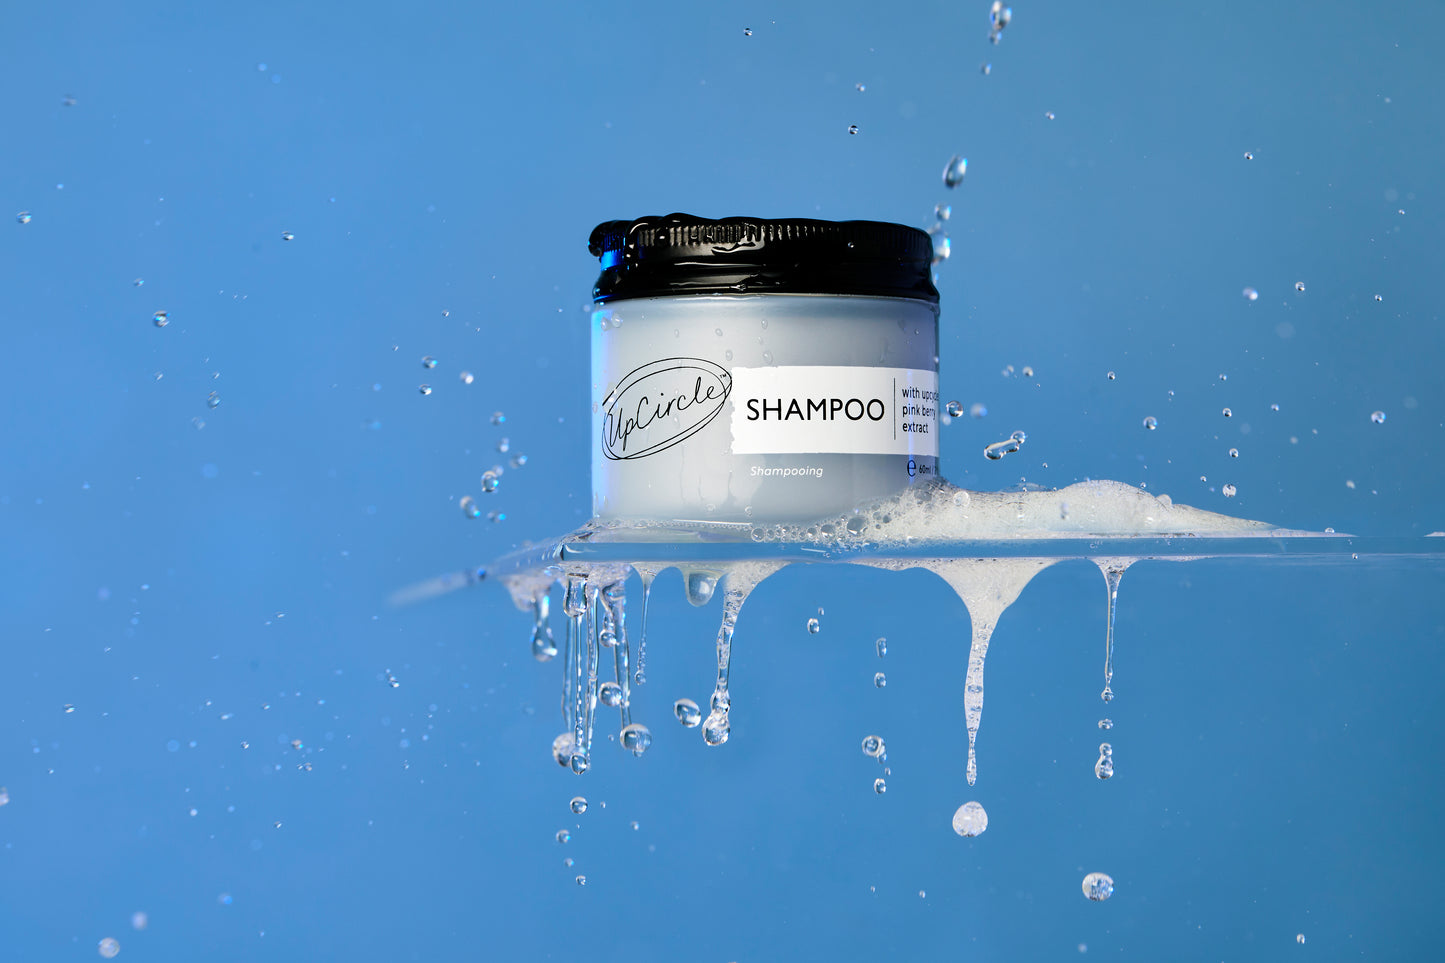 Shampoo Crème with Coconut and Grapefruit Oil